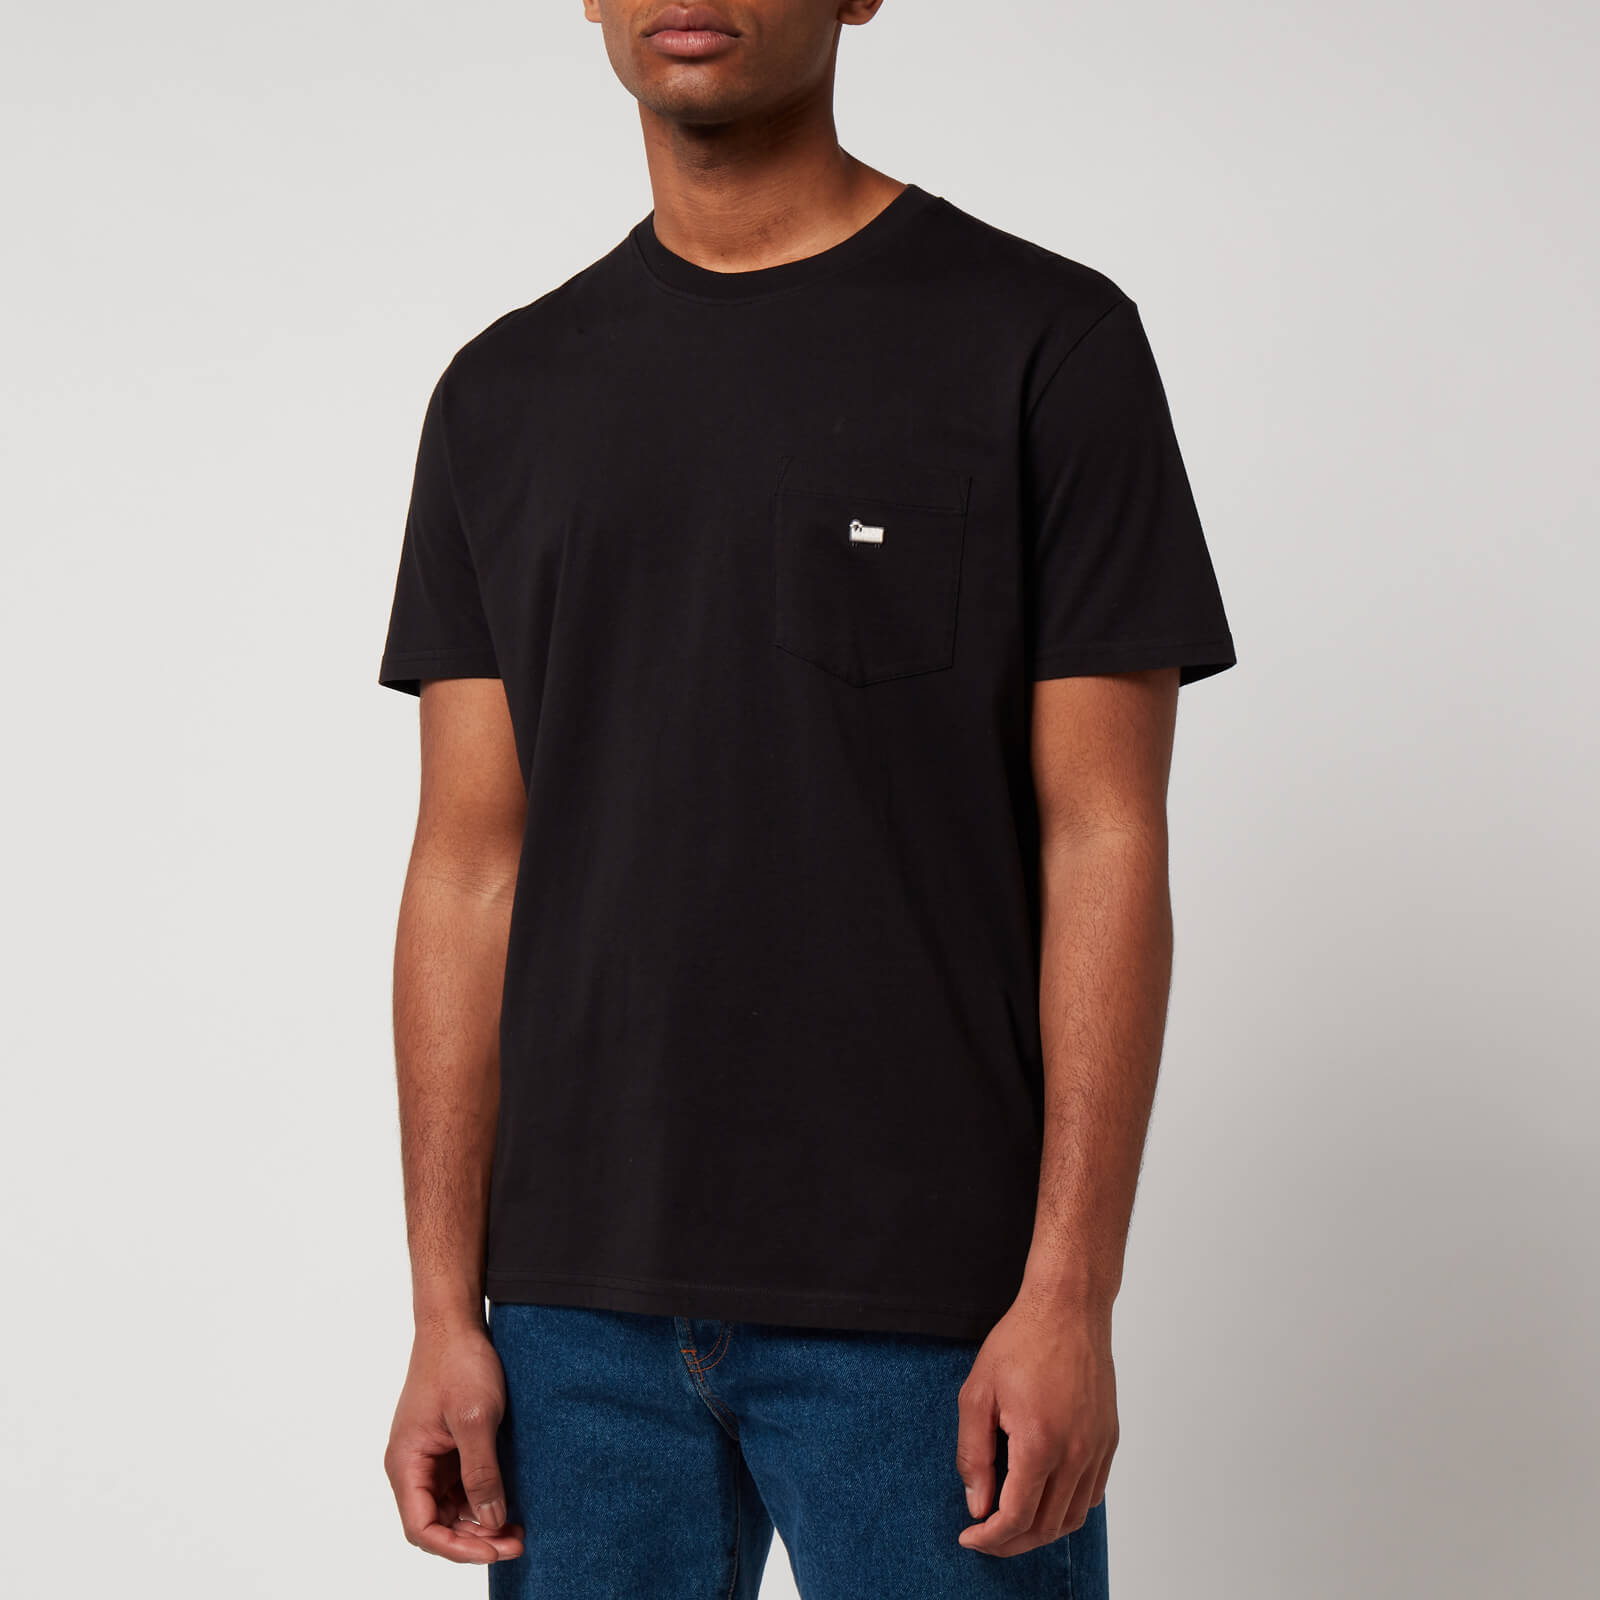 Woolrich Men's Pocket T-Shirt - Black - S